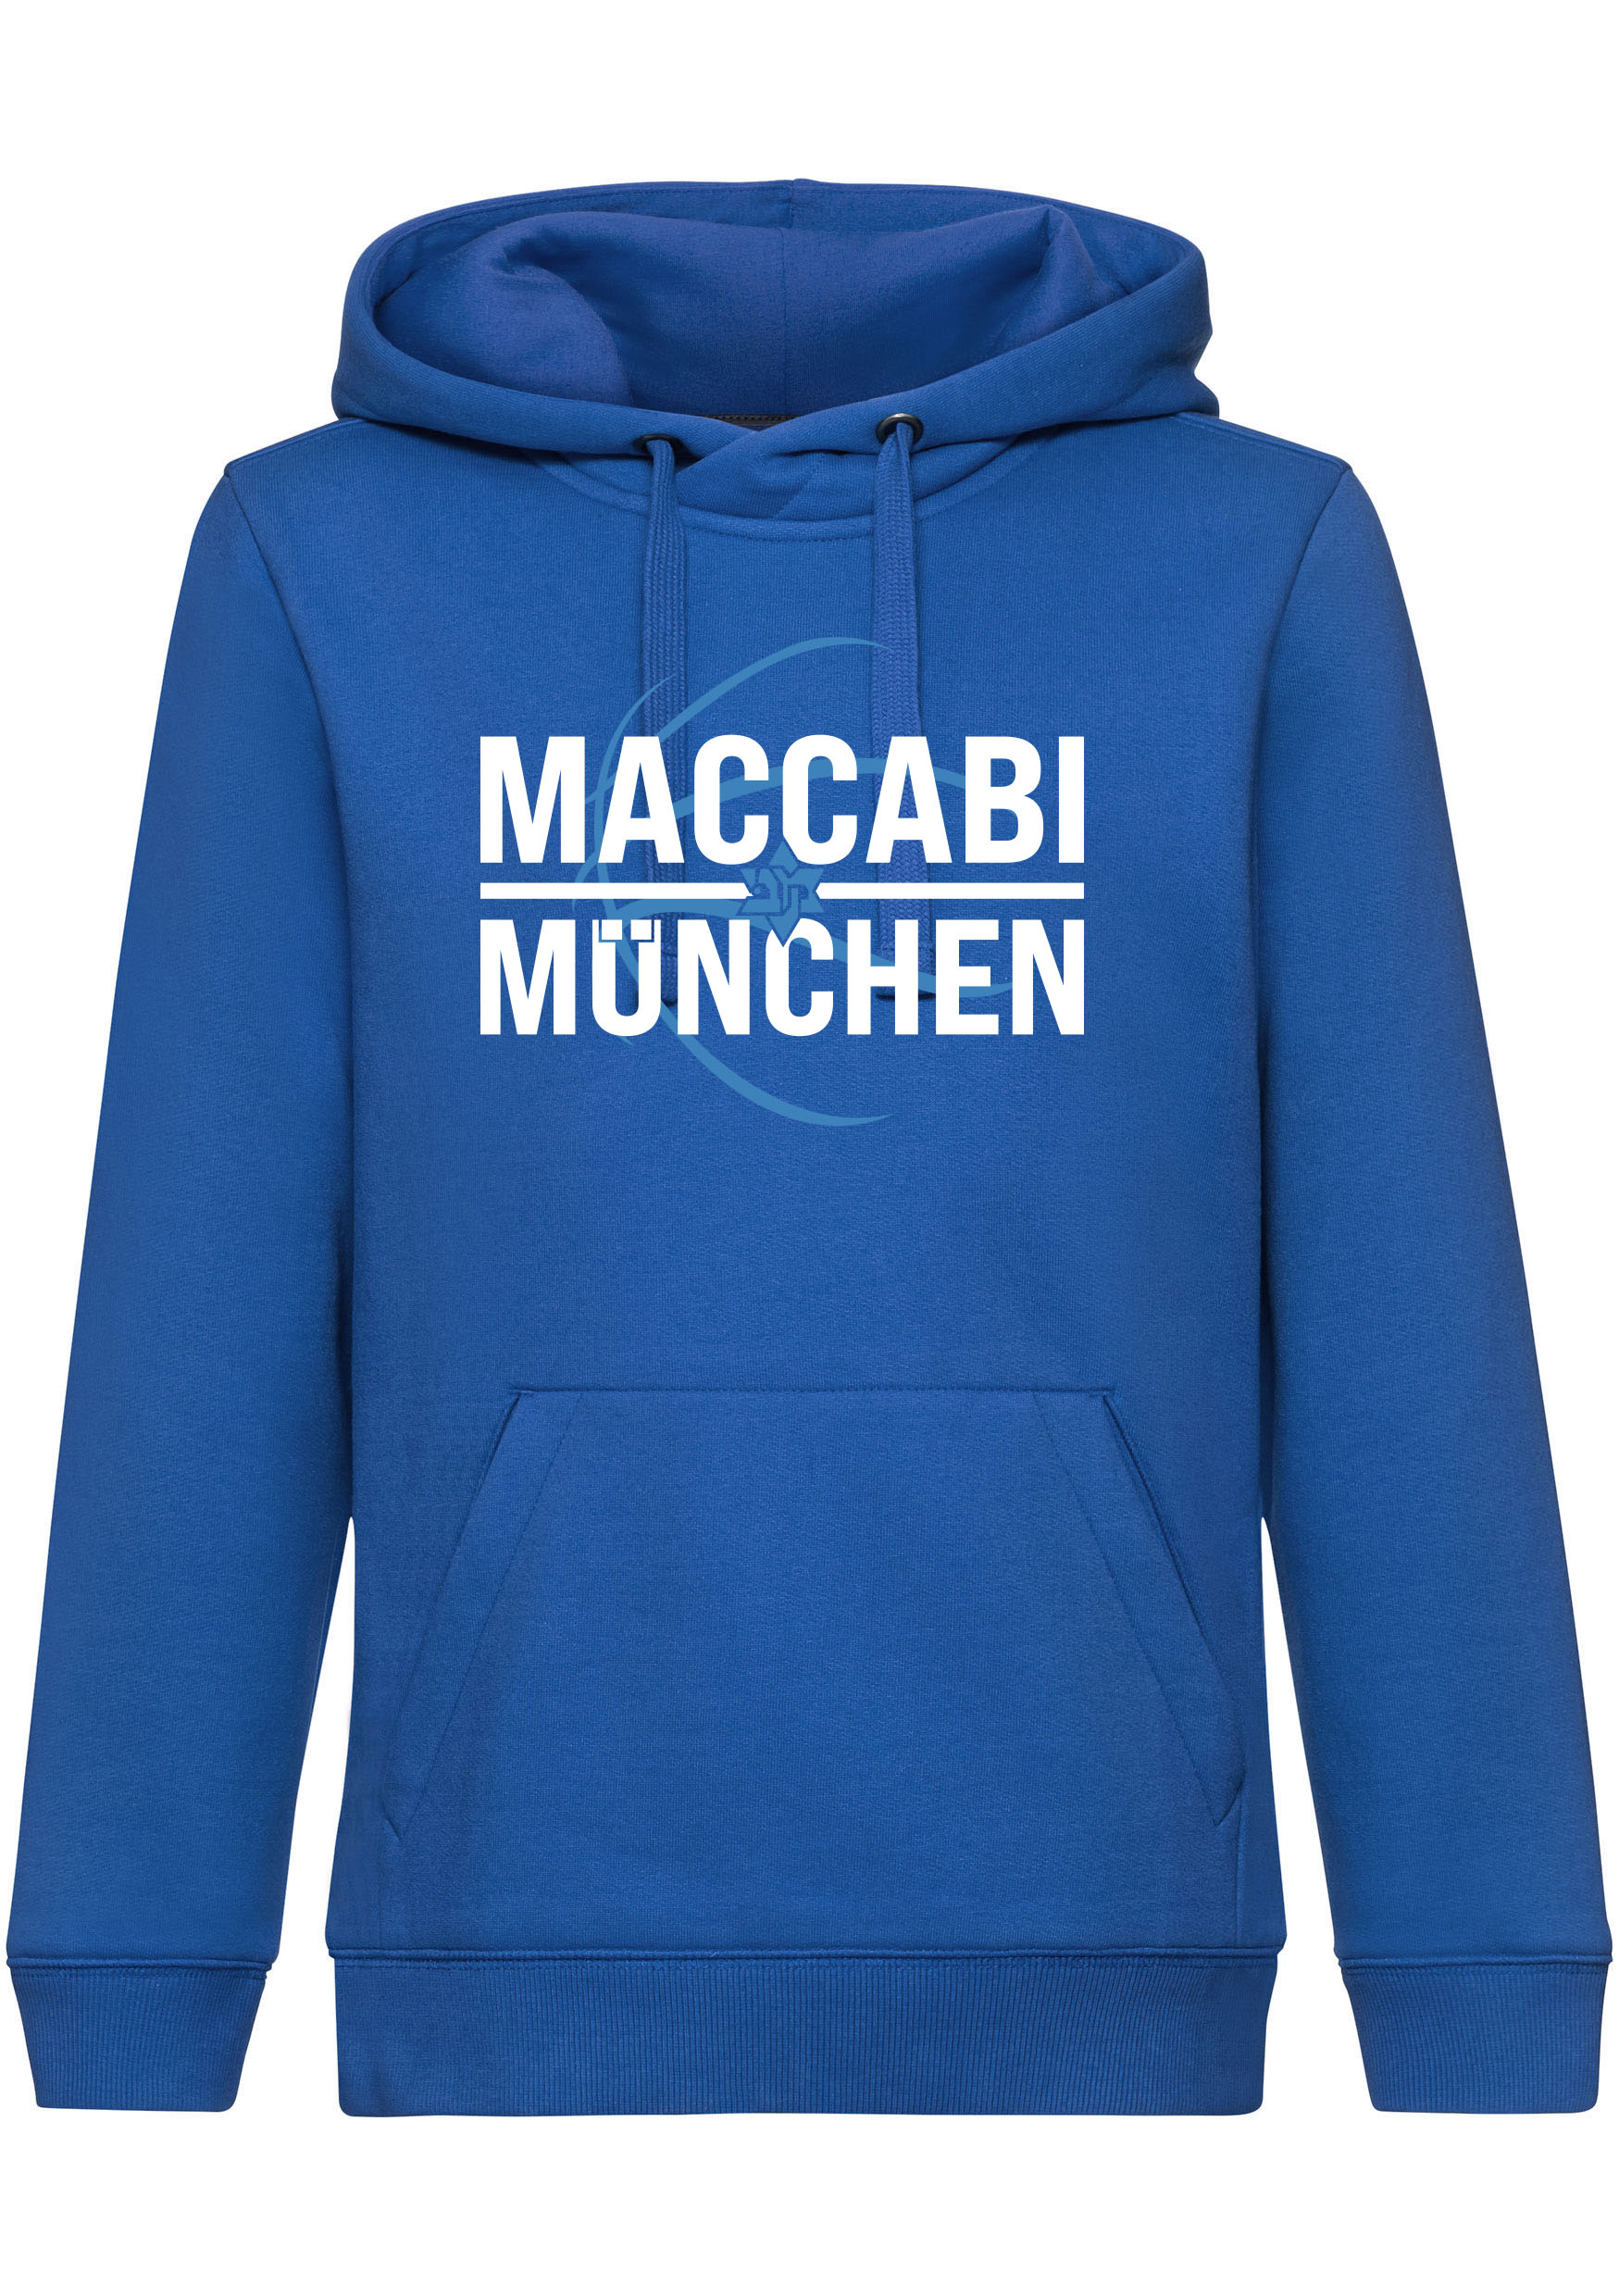 Maccabi München Hoodie Kids blau